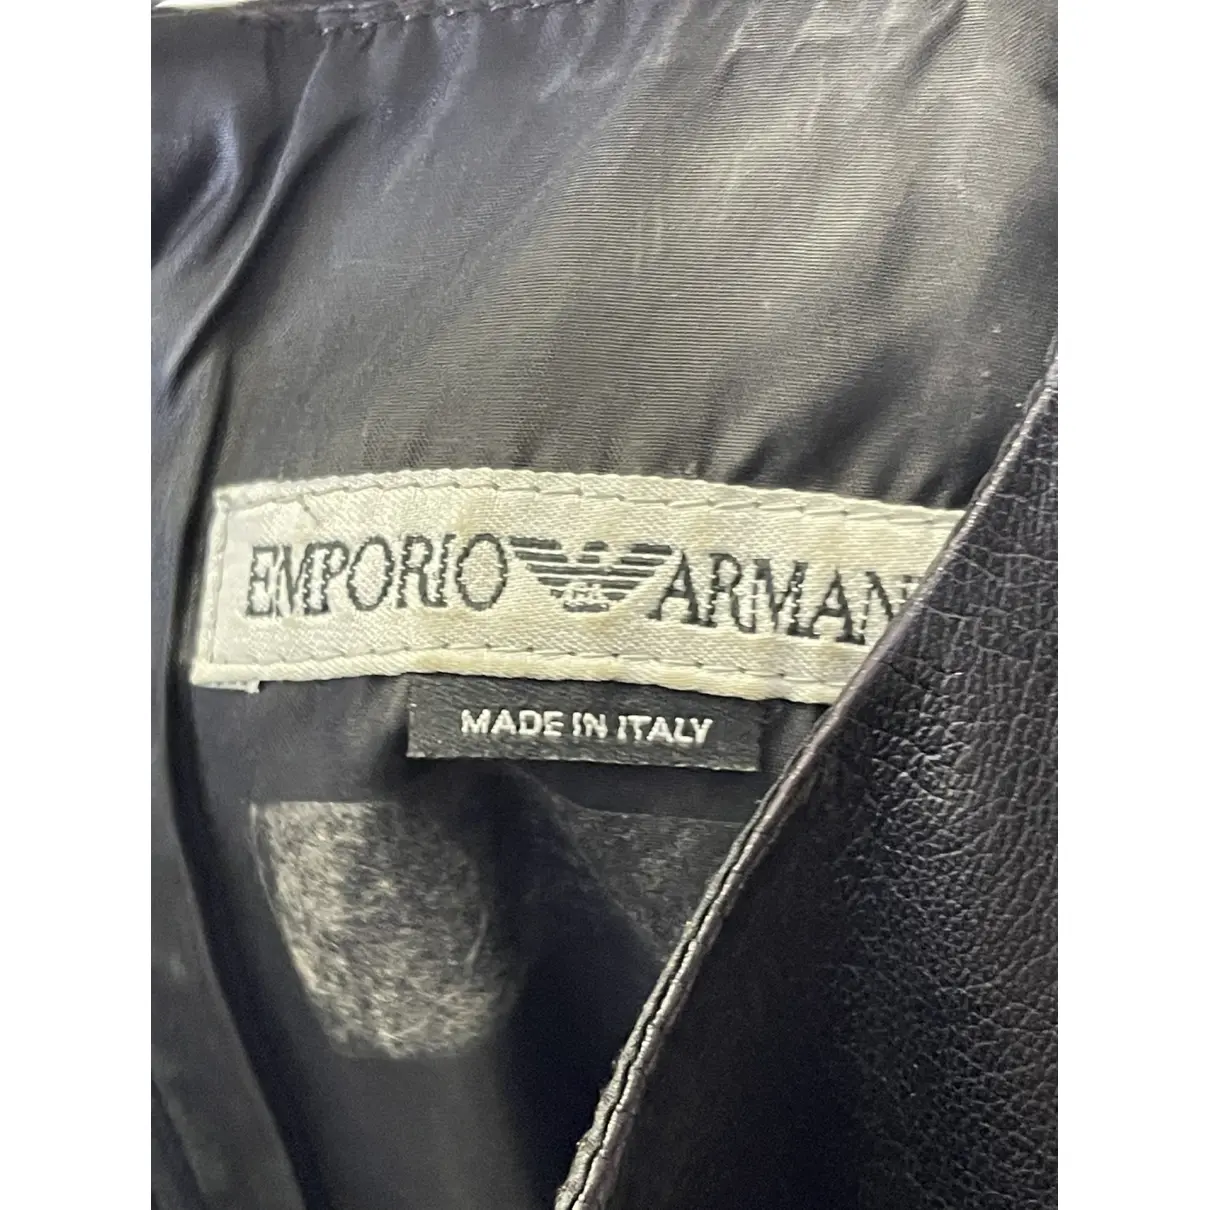 Buy Emporio Armani Vegan leather mini dress online